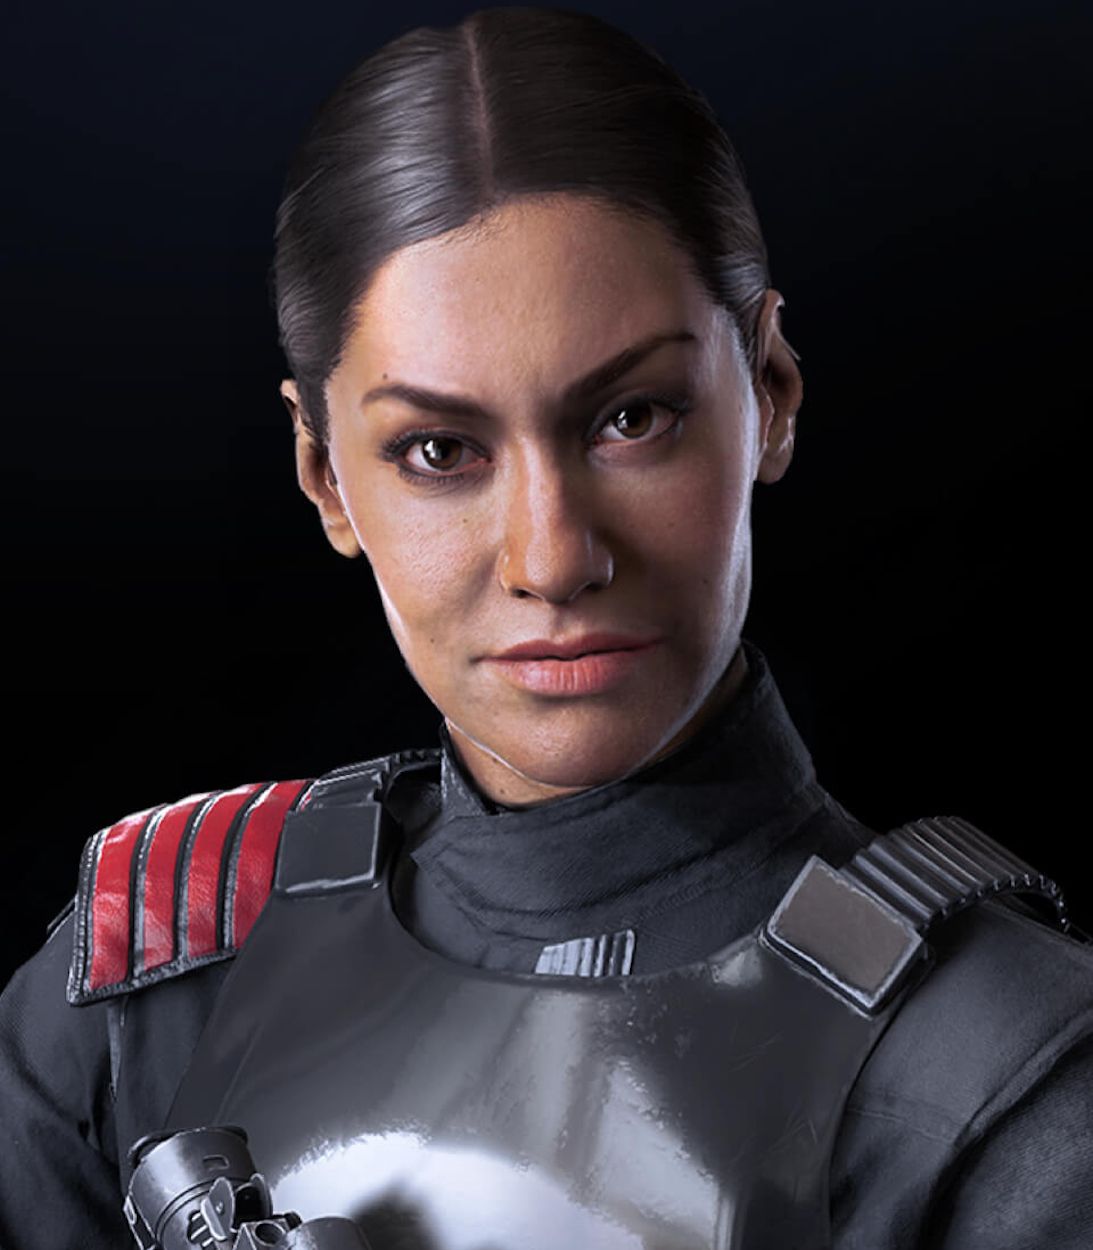 Janina Gavankar as Iden Versio in Star Wars Battlefront II Vertical